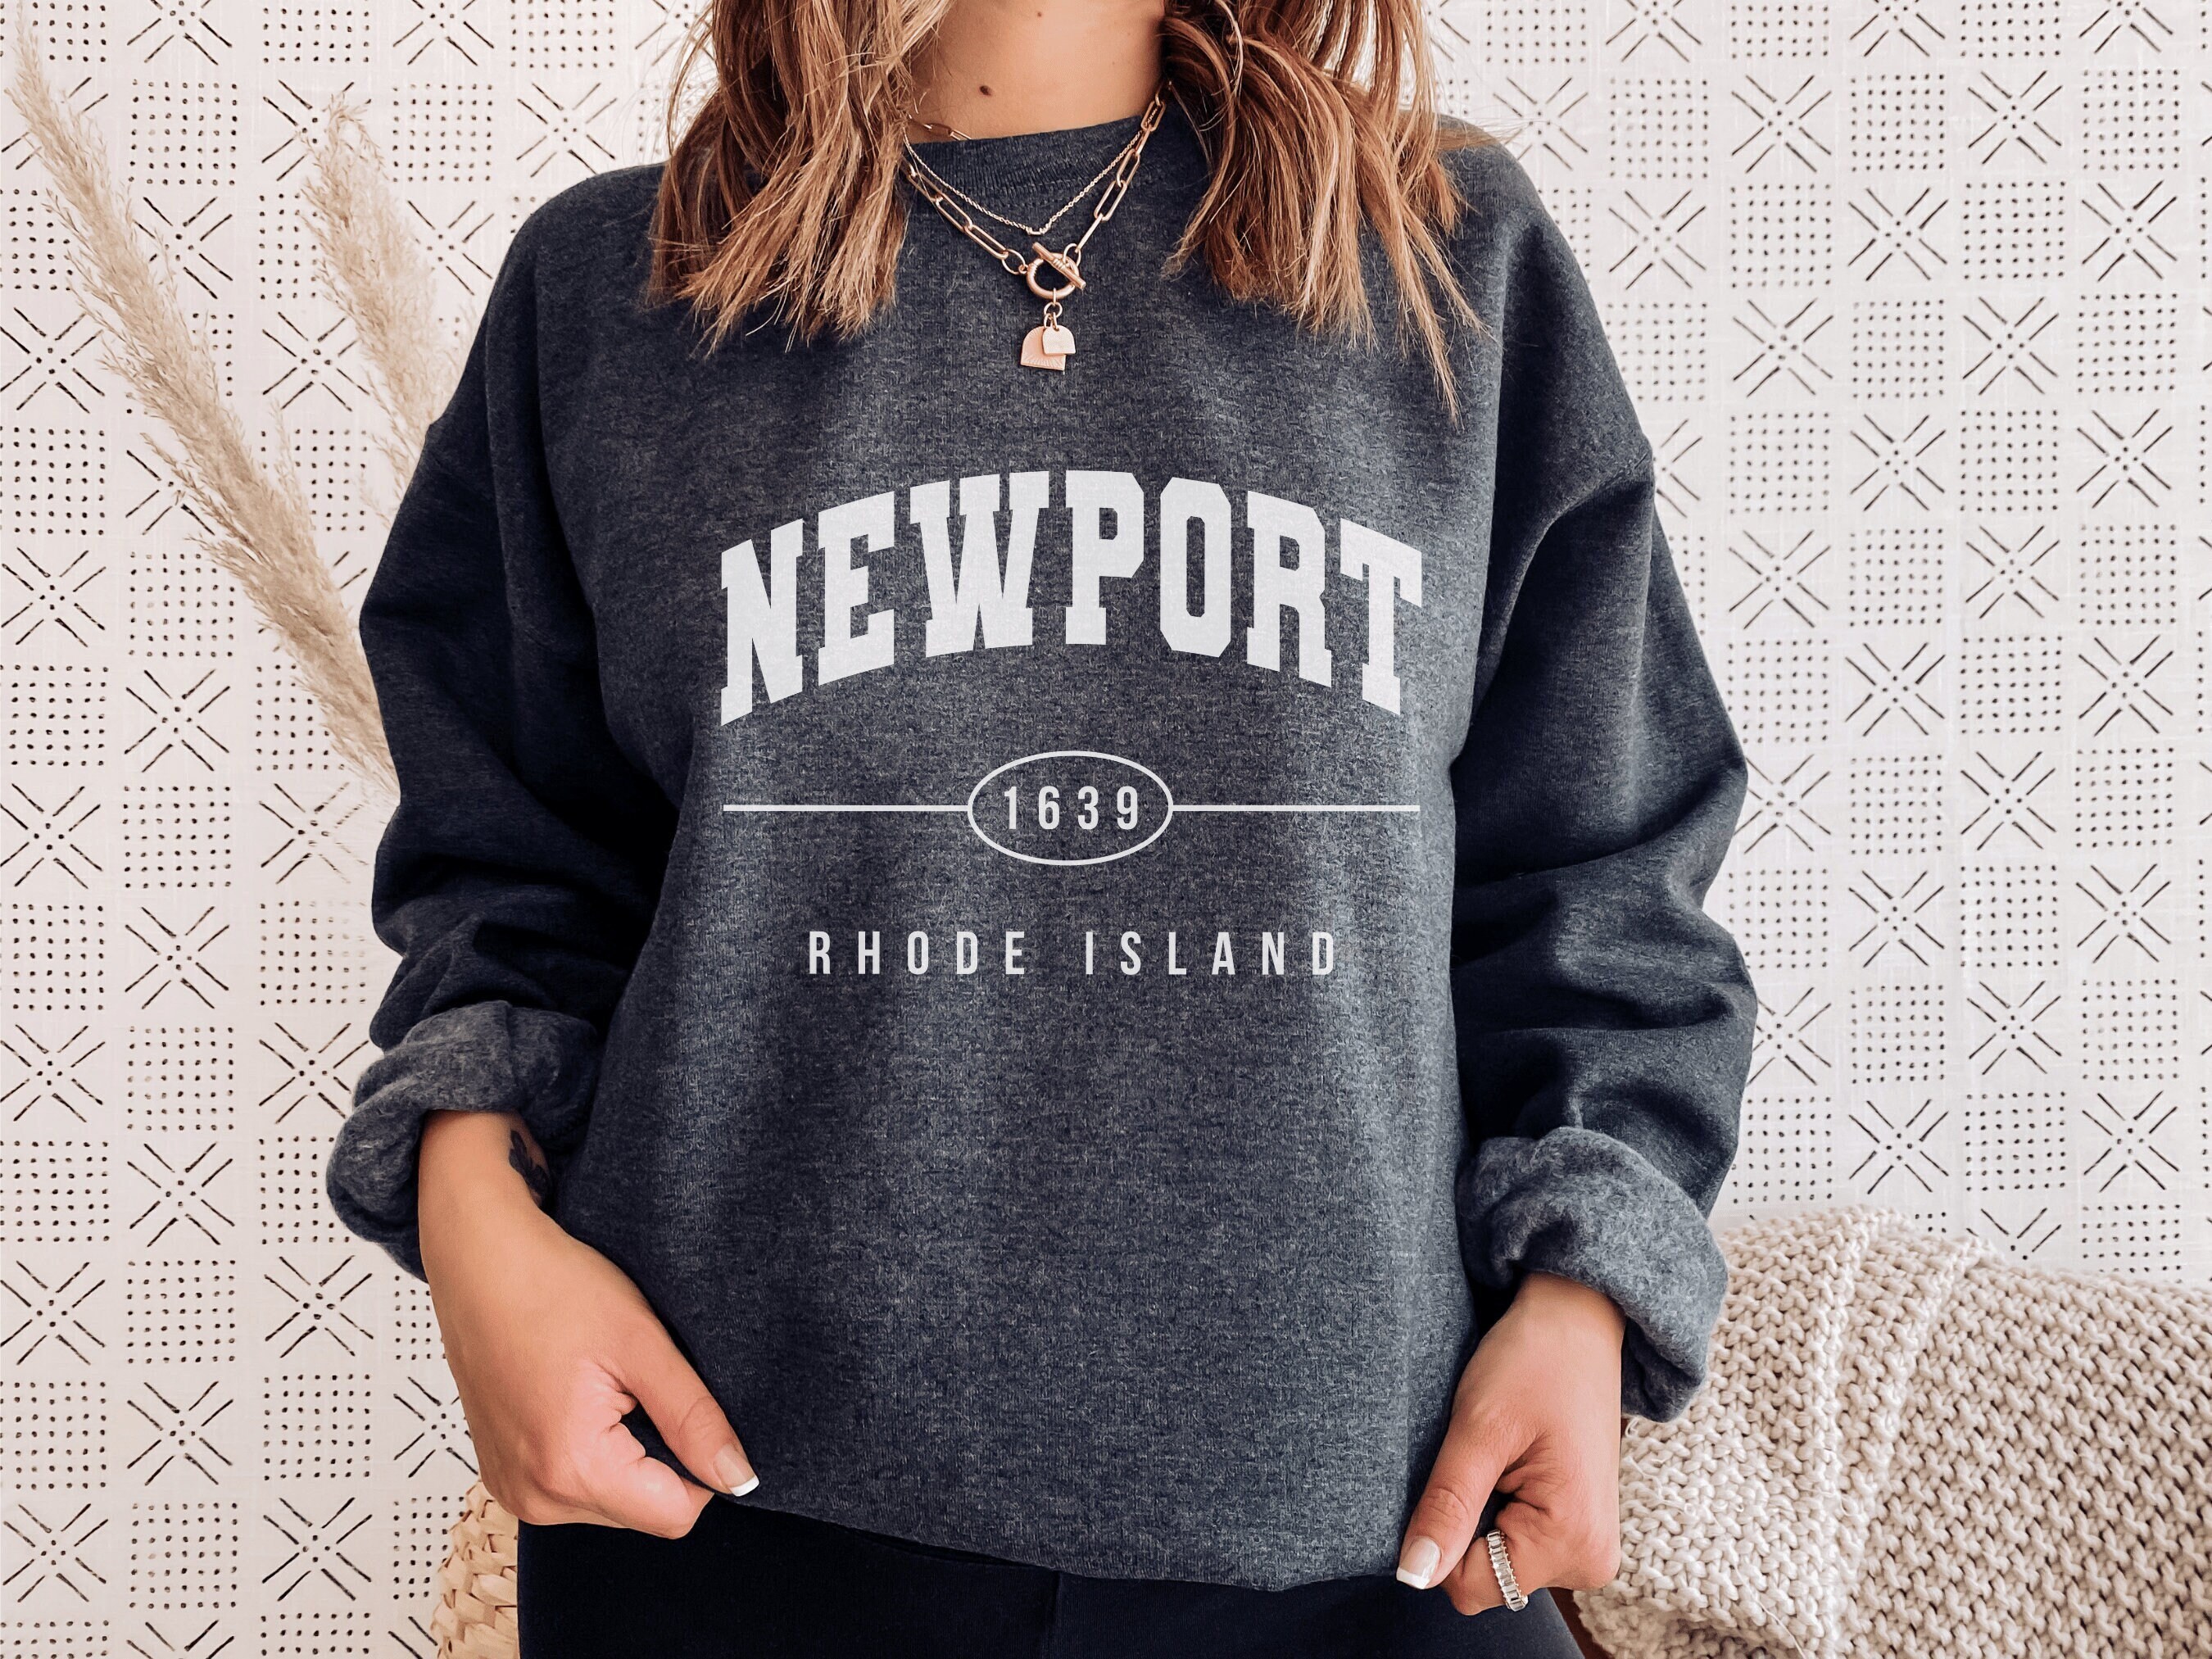 Newport Sweatshirt Newport Sweater Newport Rhode Island - Etsy